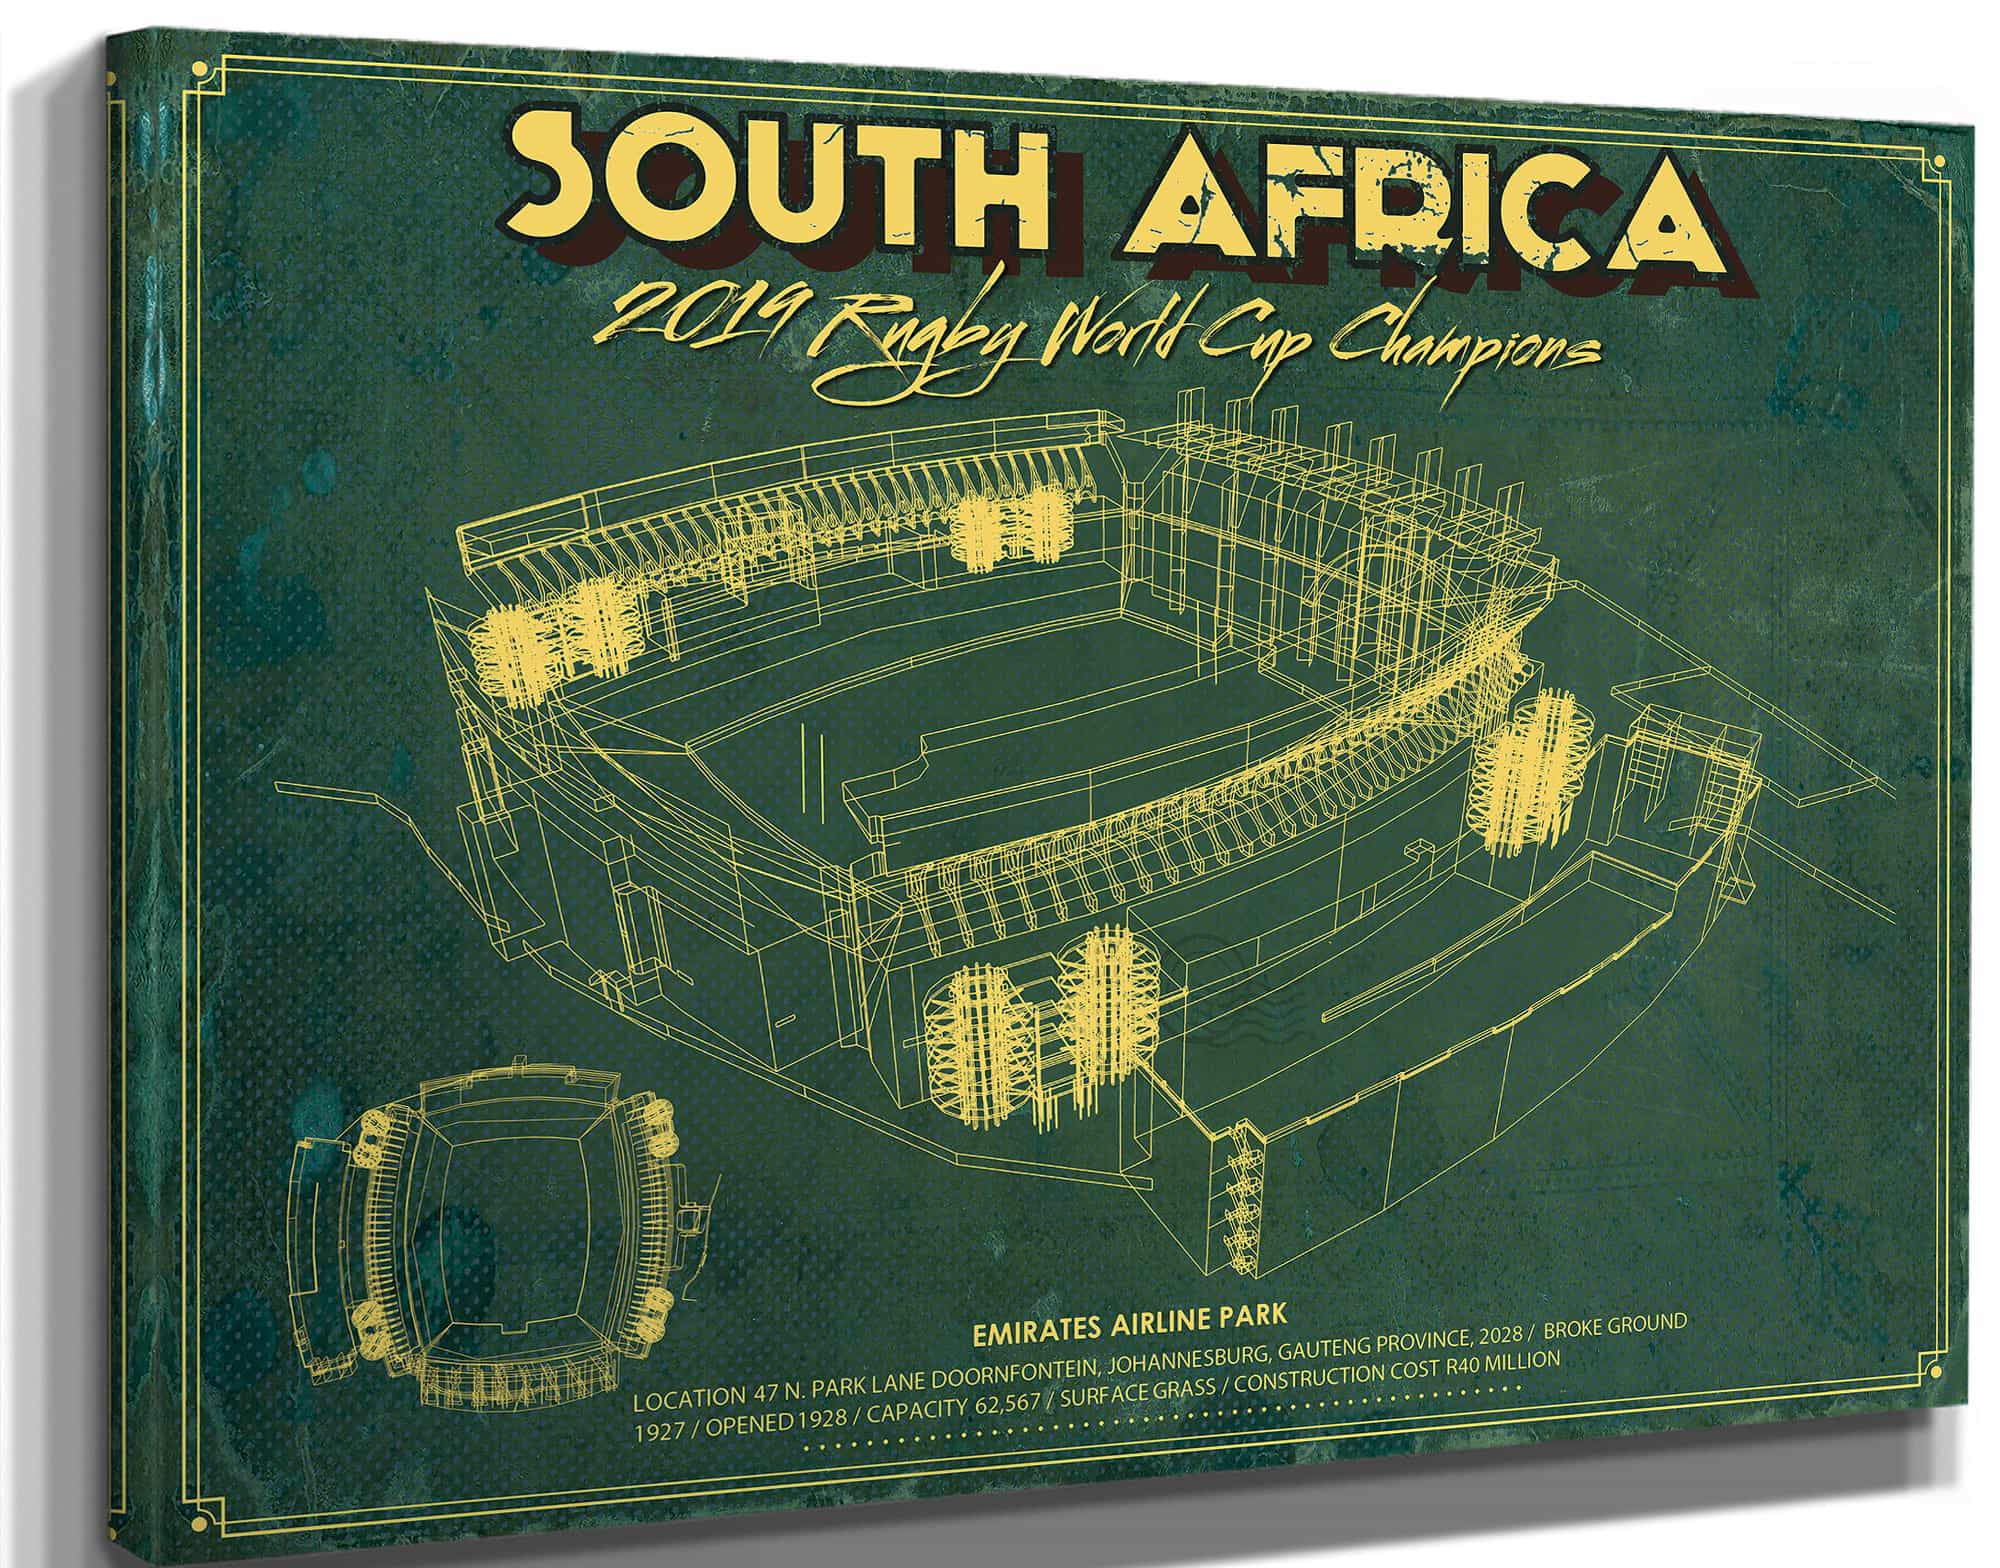 South Africa World Cup 2019 Champions - Vintage Ellis Park Stadium Print